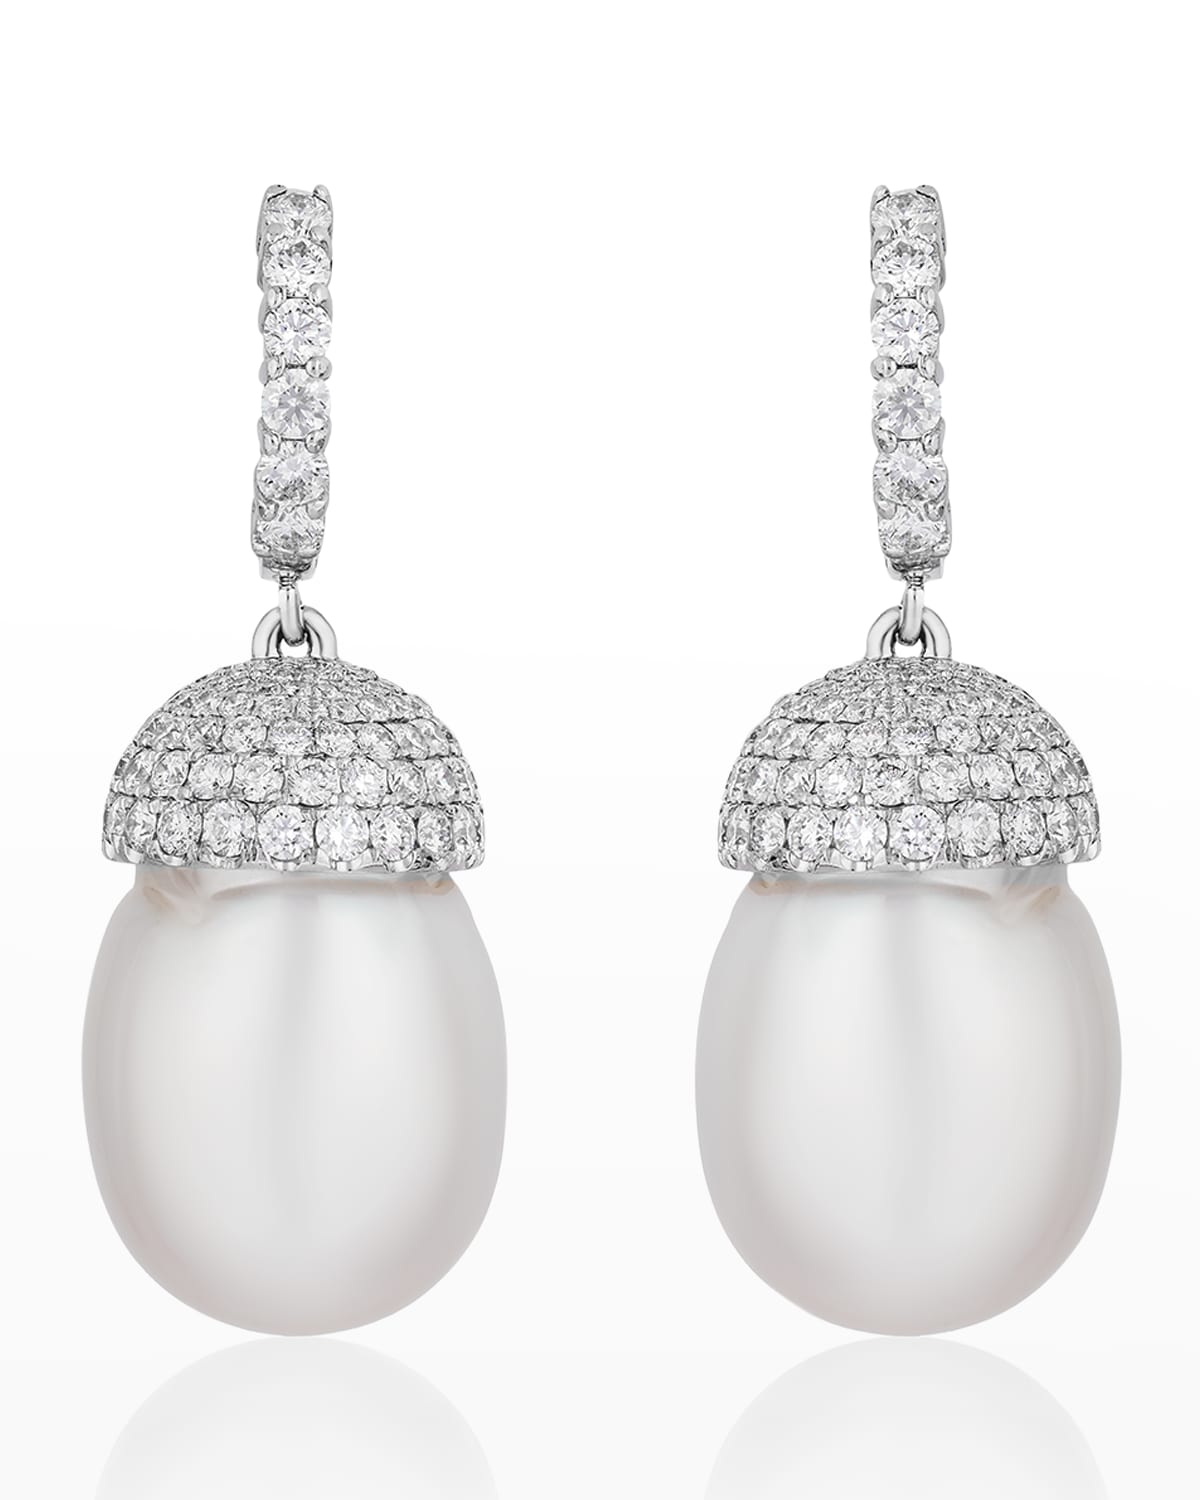 Andreoli Diamonds and South Sea Pearl Earrings